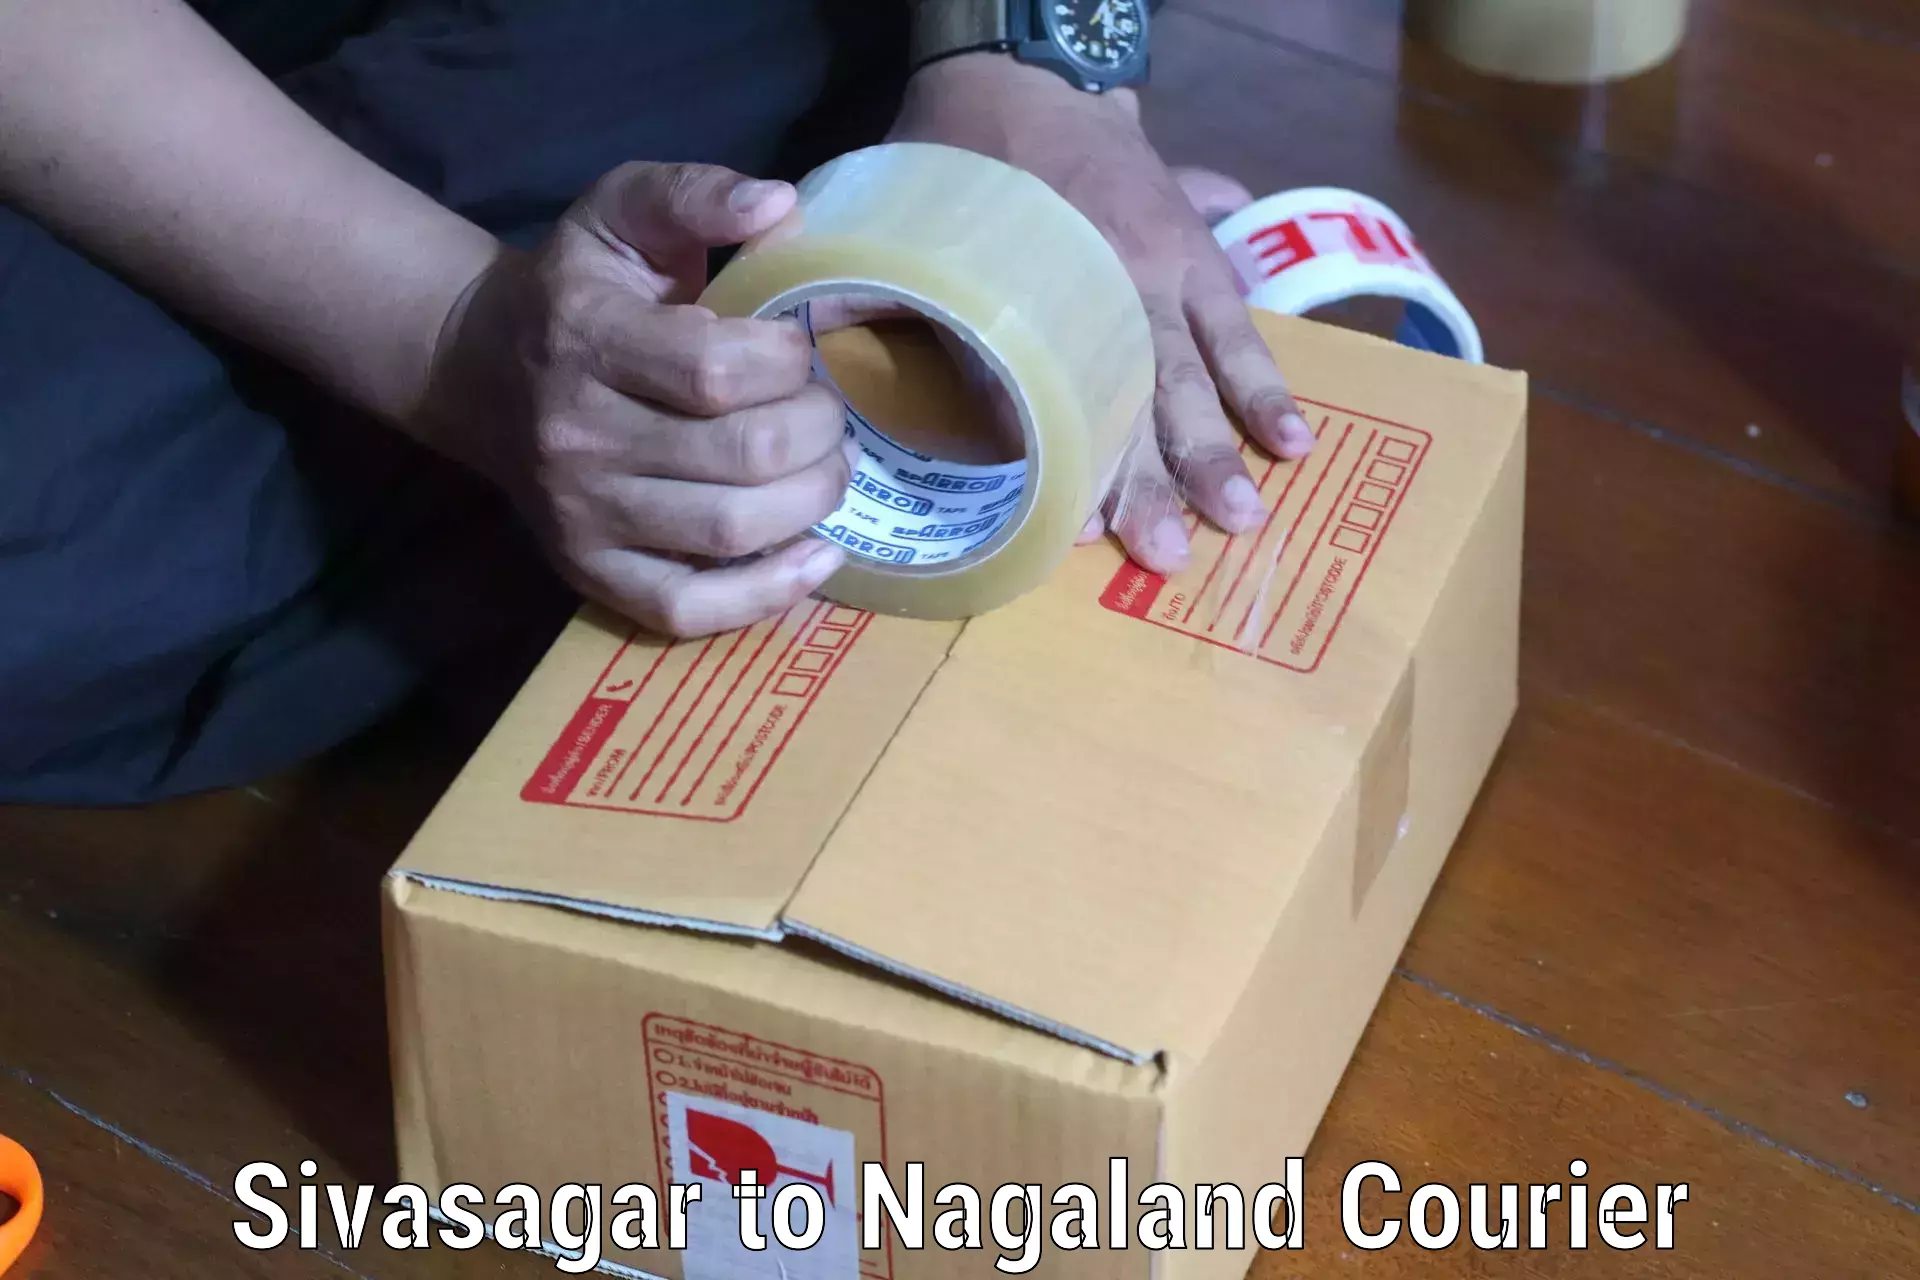 Courier service innovation in Sivasagar to Dimapur